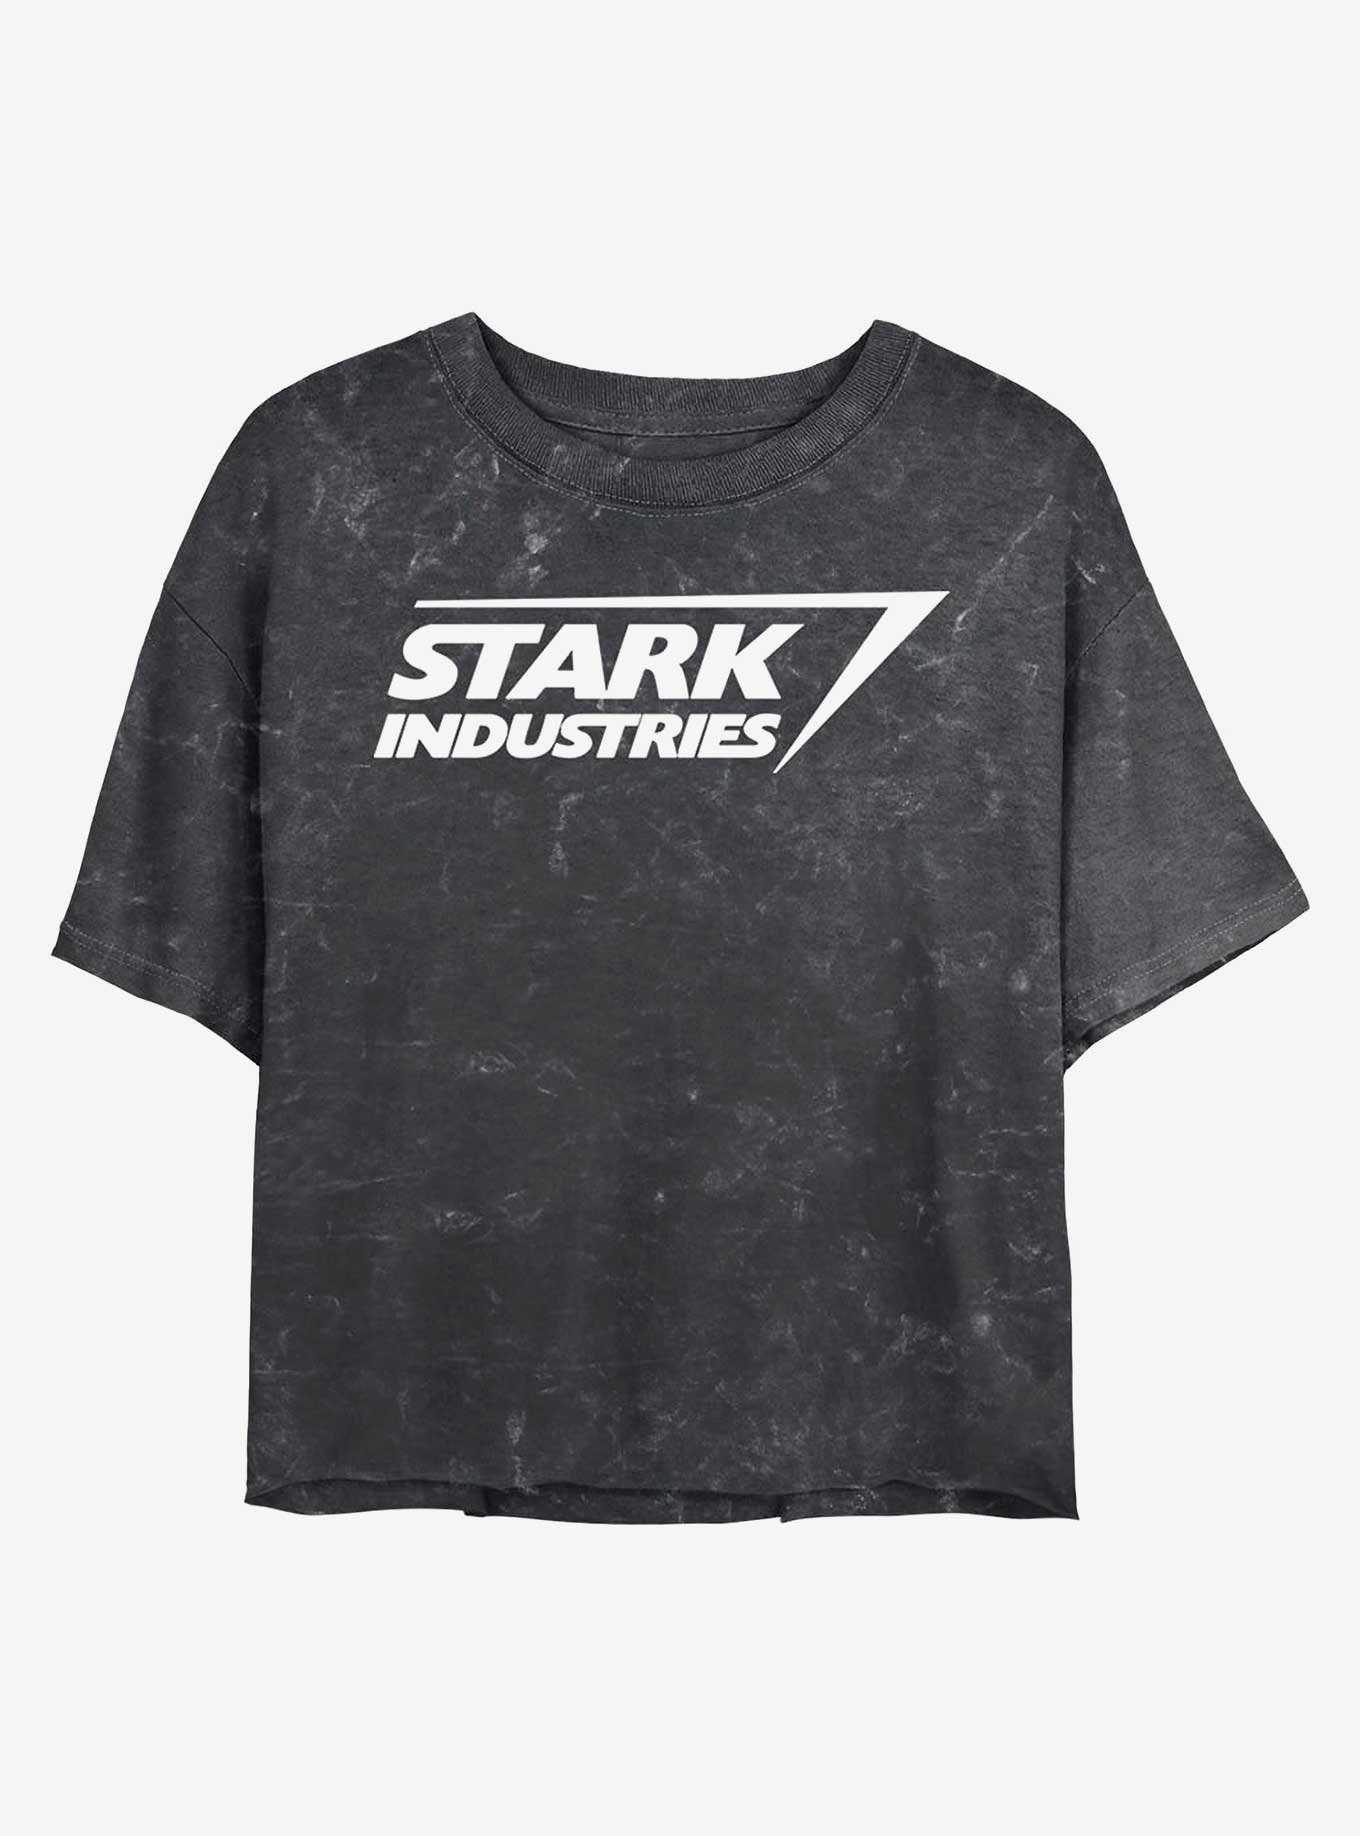 OFFICIAL Iron Man T-Shirts & Merchandise